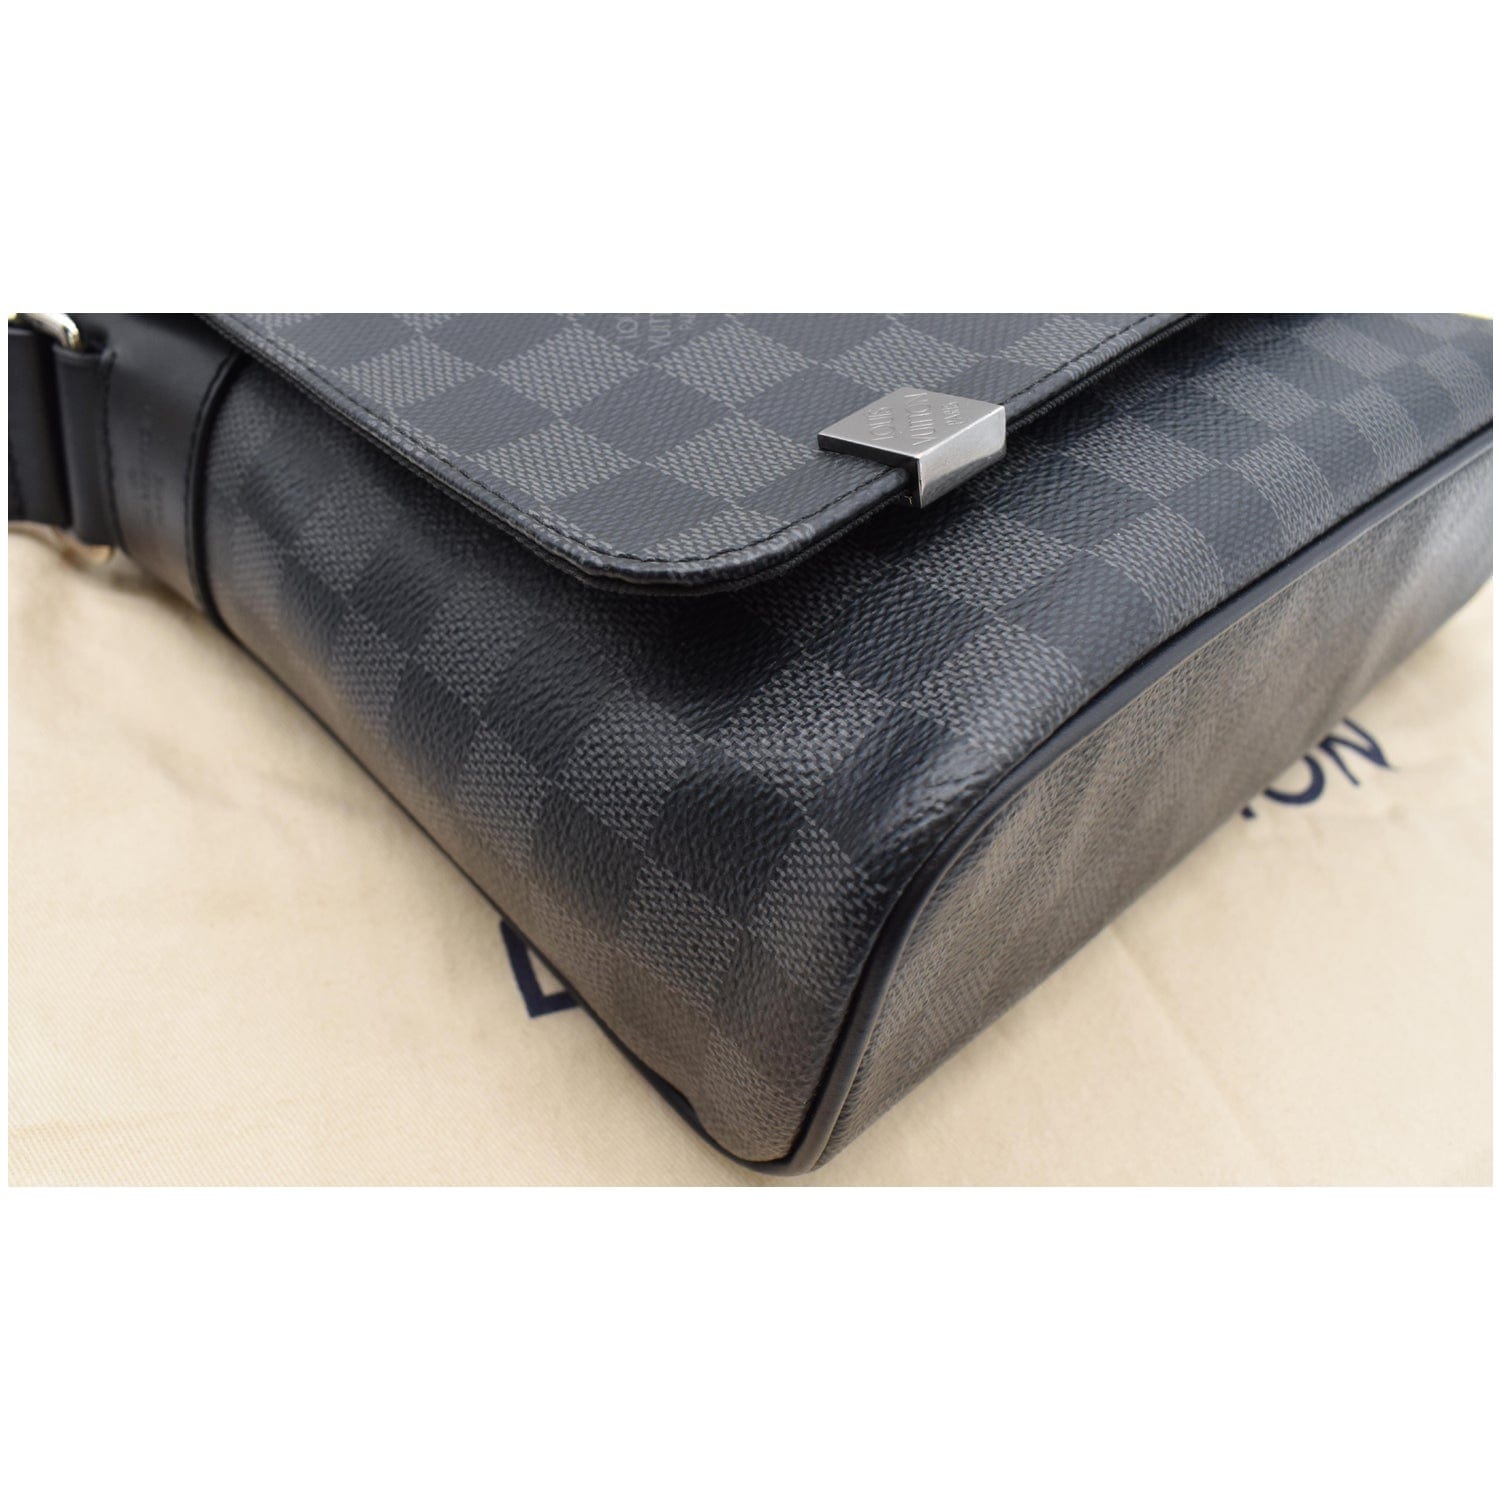 Black Louis Vuitton Damier Graphite District PM Crossbody Bag